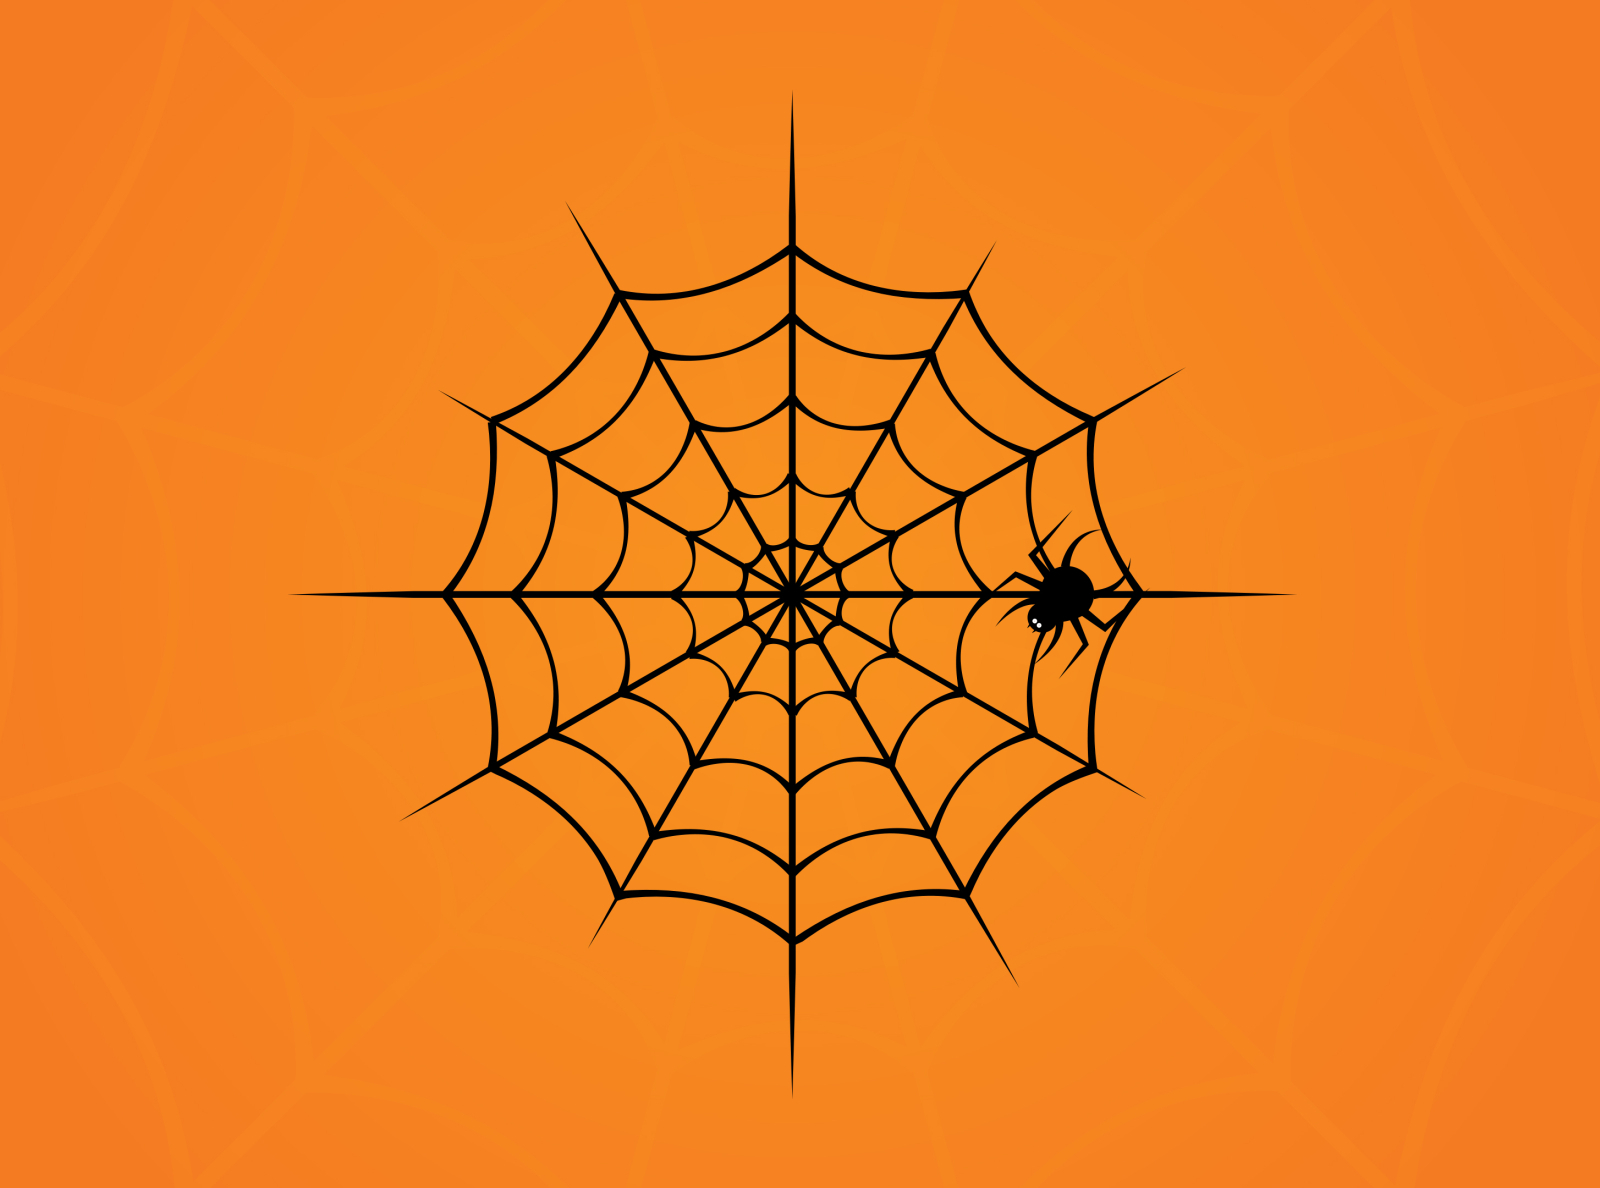 7. "Halloween Nail Art: Bats and Spider Webs" - wide 6